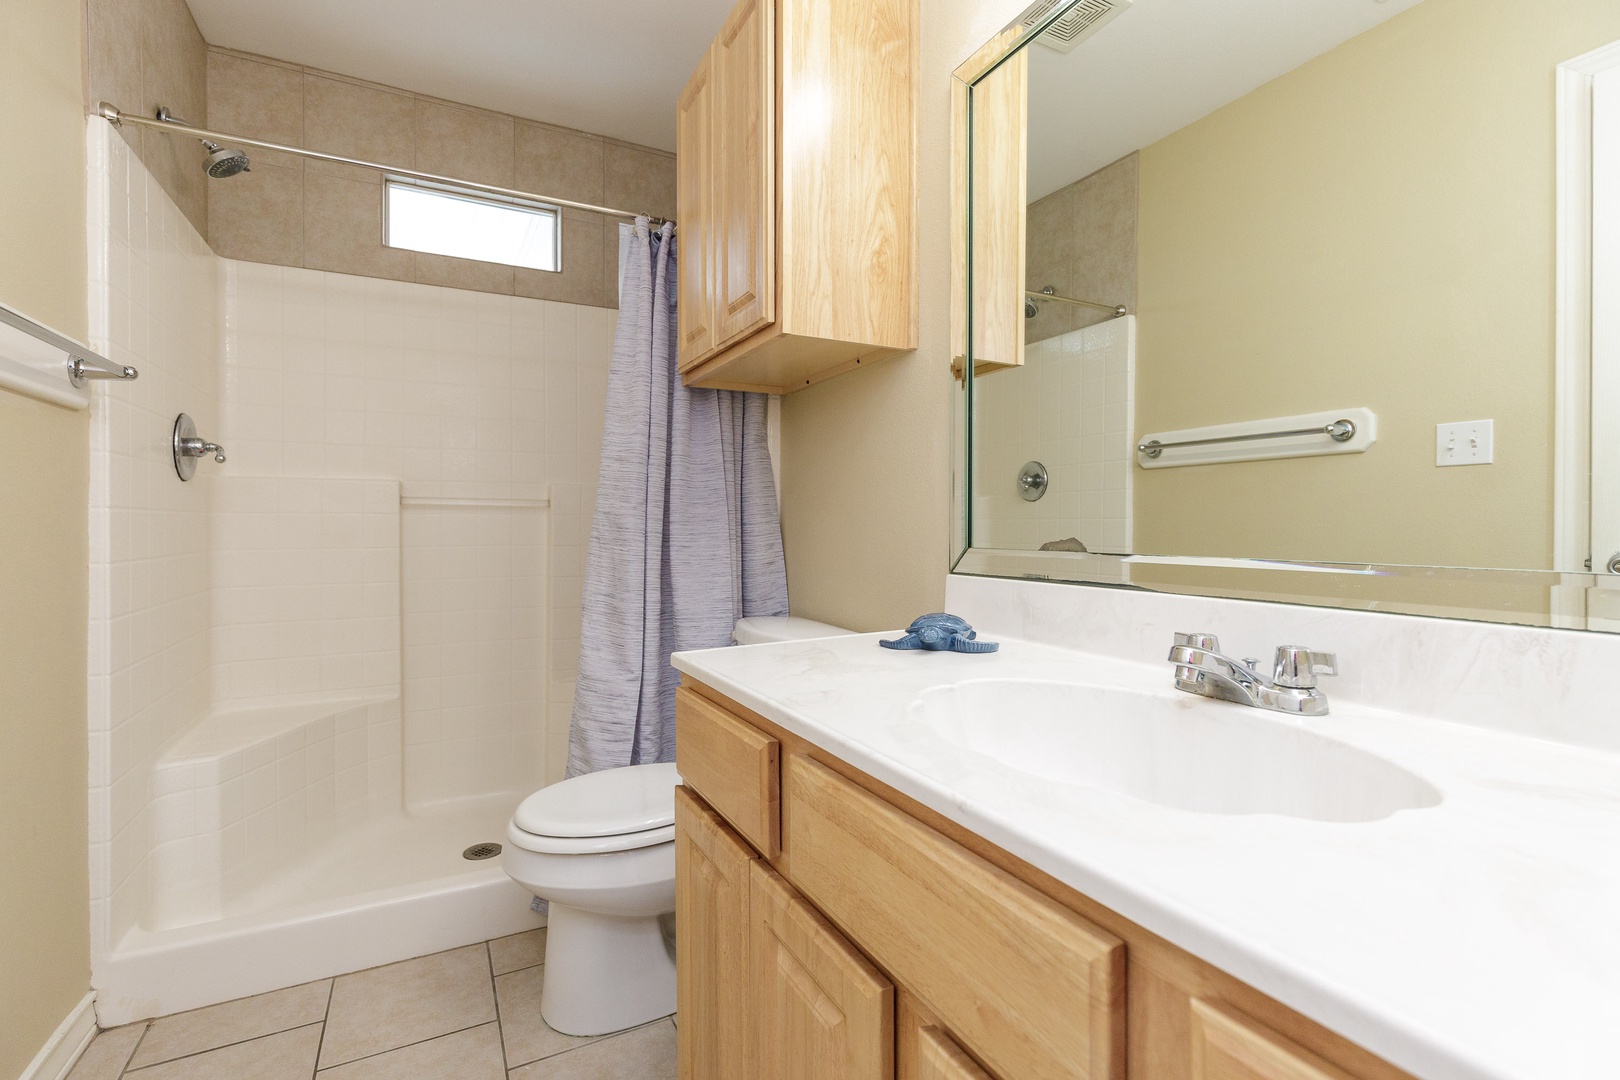 This ensuite bathroom offers an oversized vanity & walk-in shower